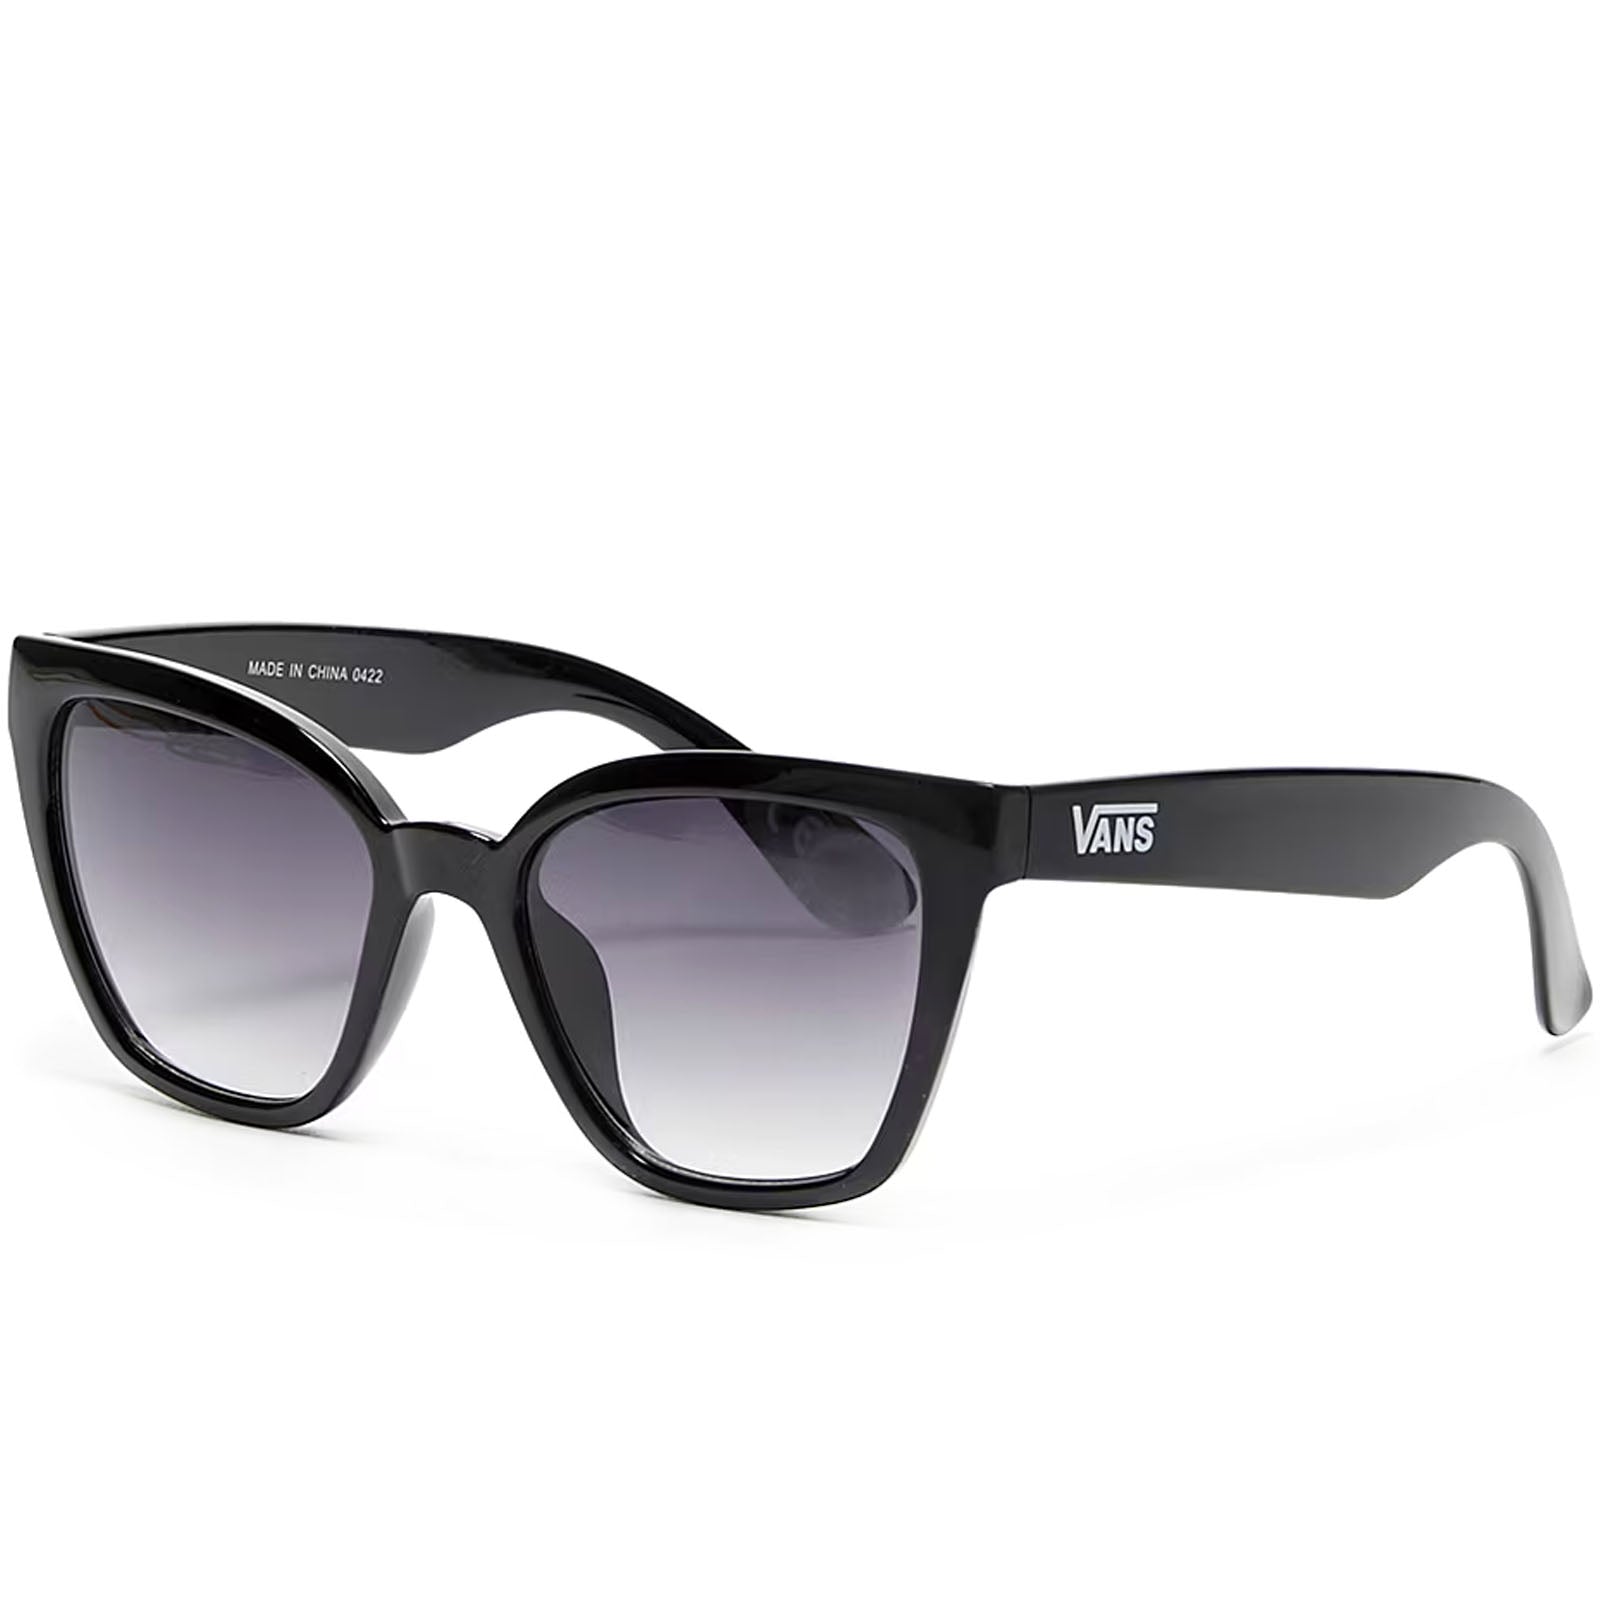 Piranha Eyewear Skyline Eco-Pact Sunglasses for Women with Smoke Lens -  Walmart.com